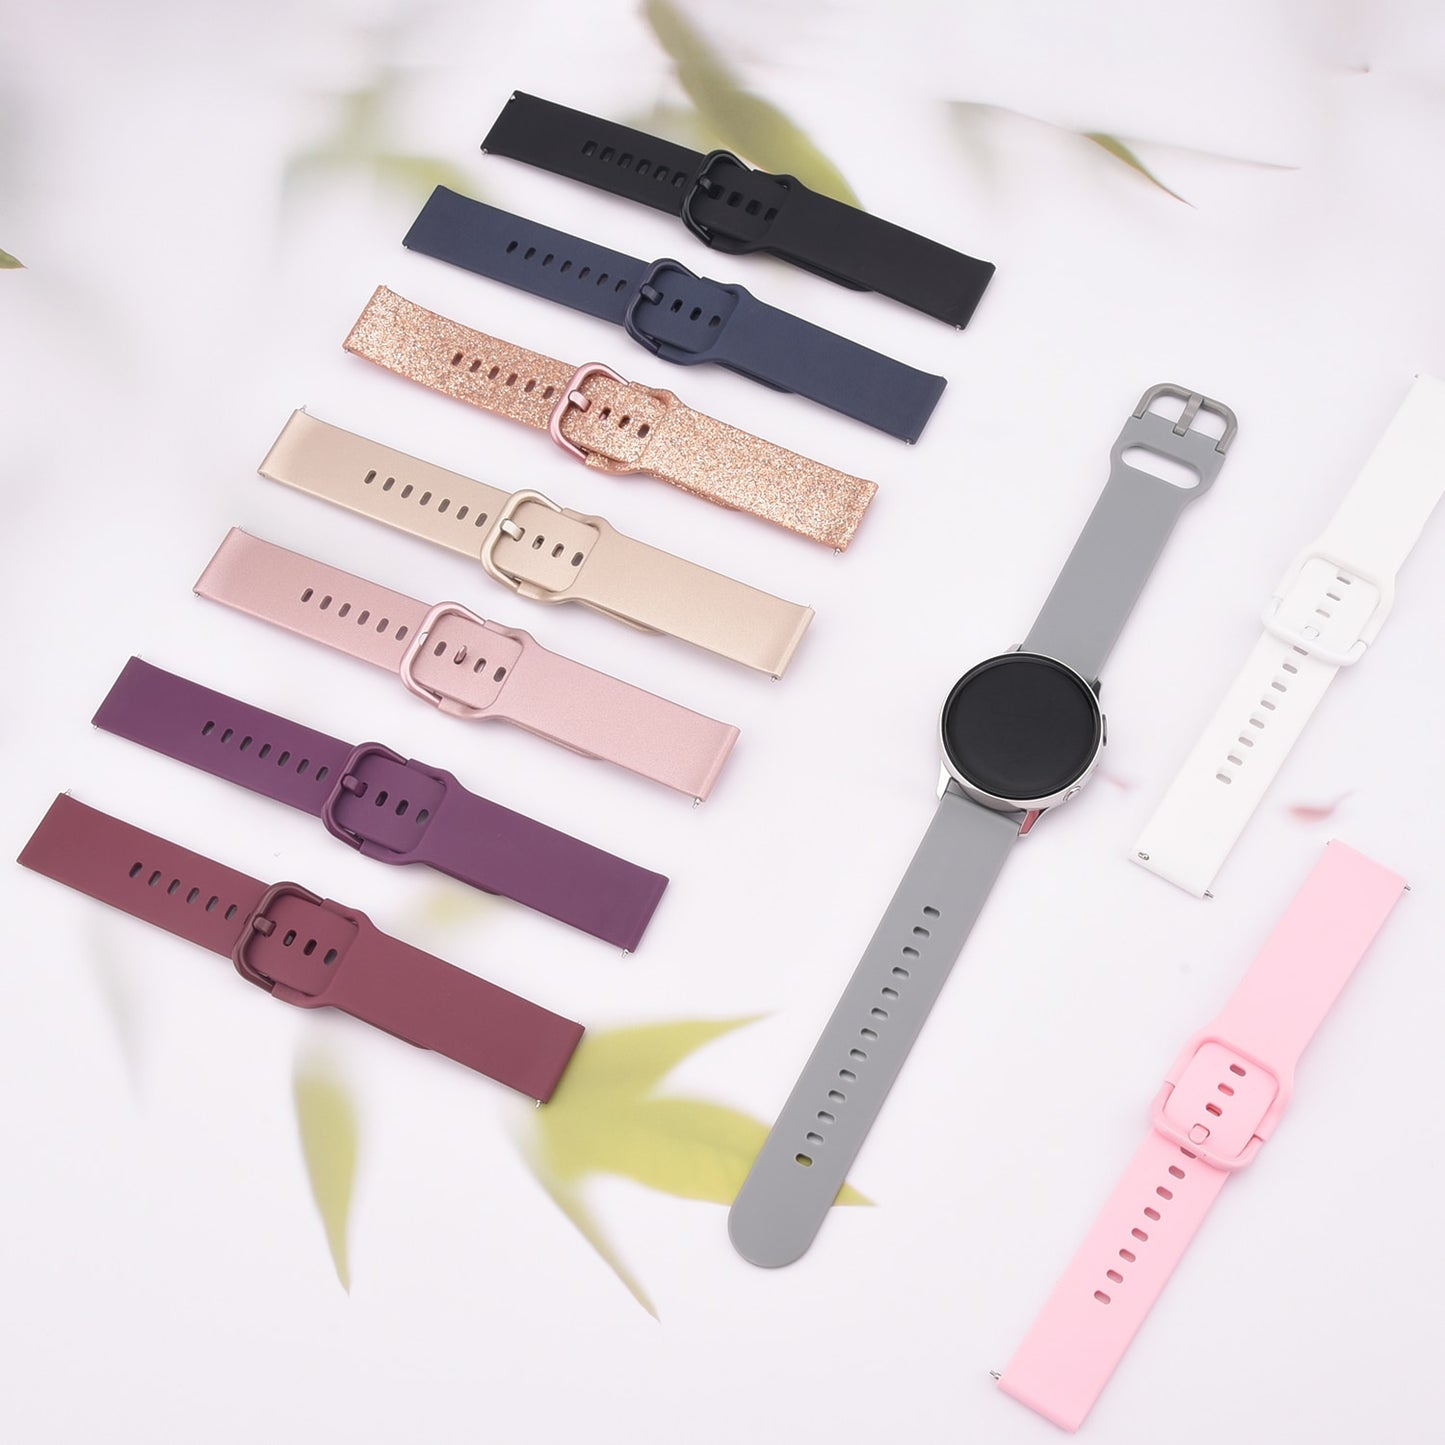 Smart Watch 20mm Silicone Wrist Strap